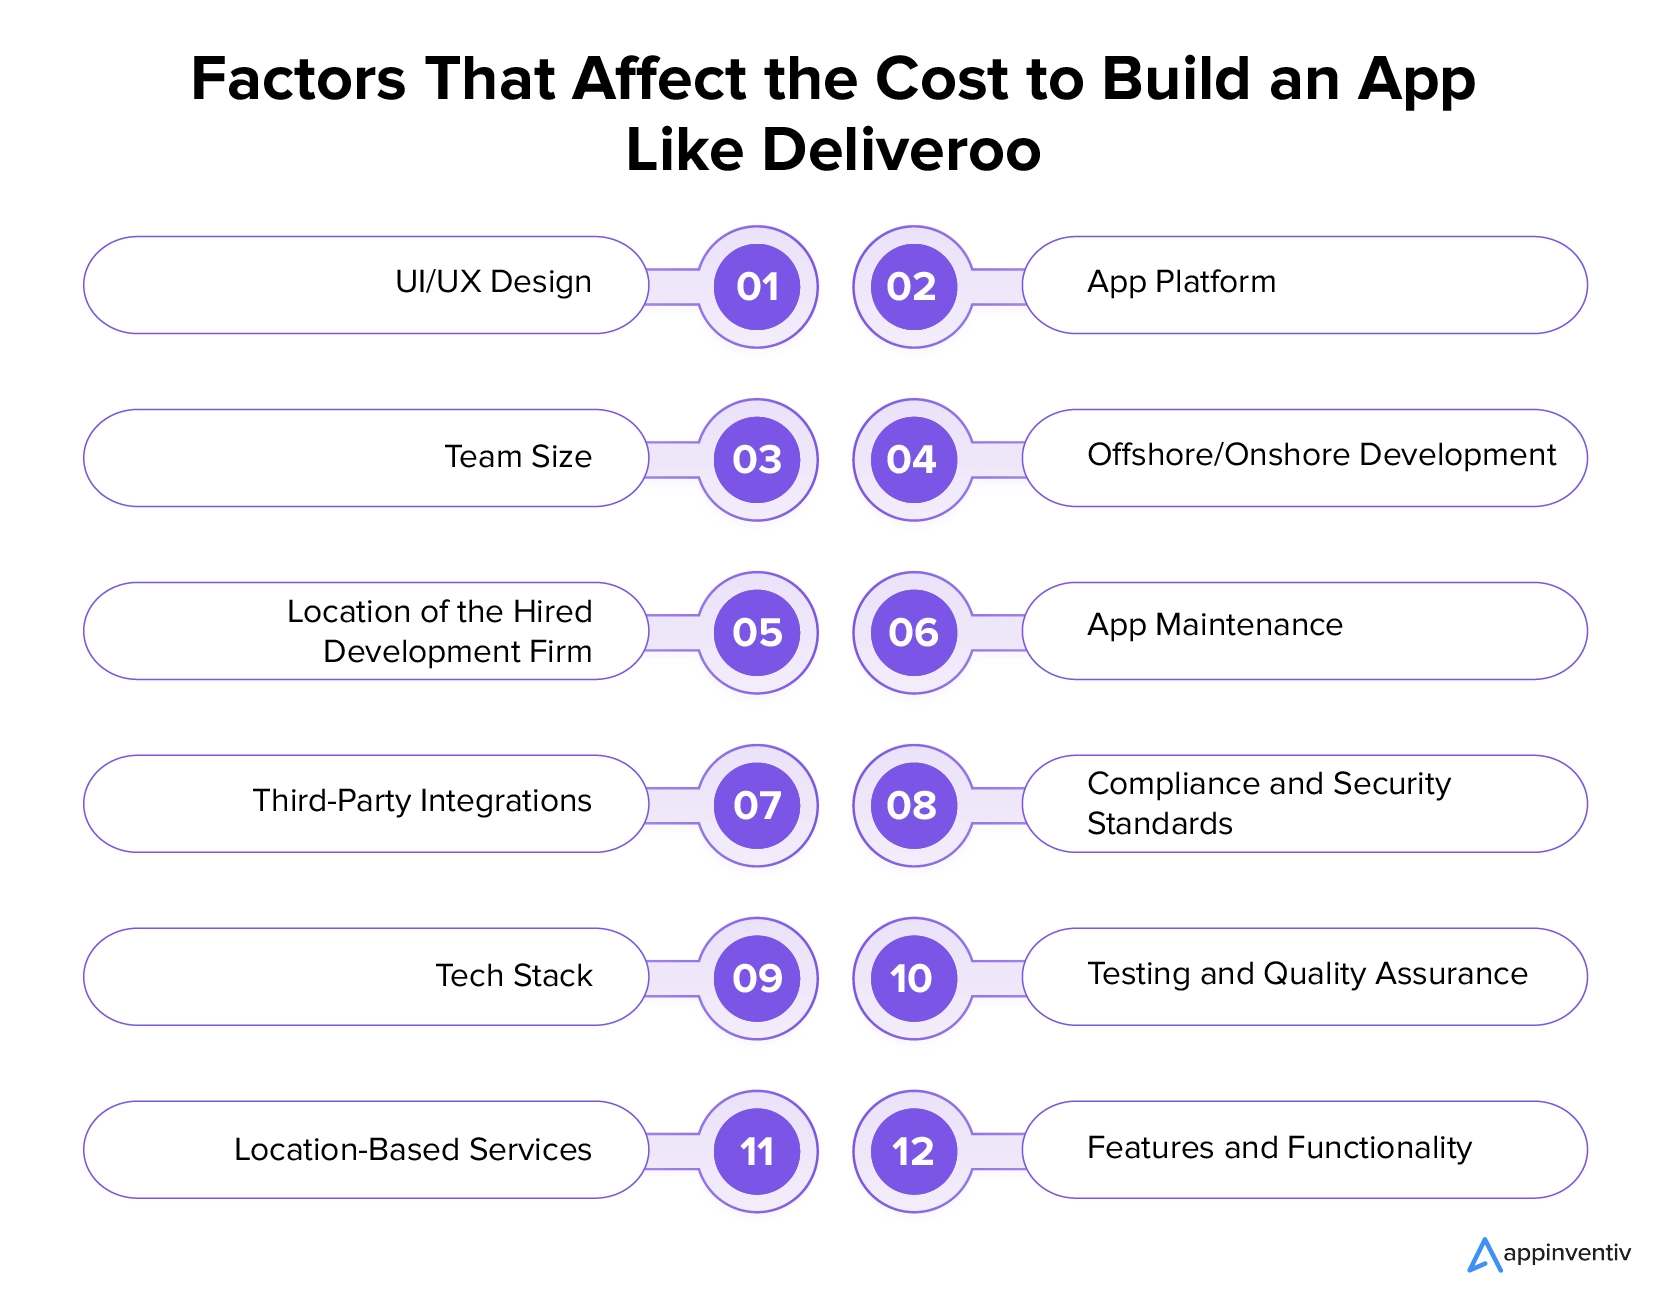 Deliveroo のようなアプリの構築コストに影響を与える要因